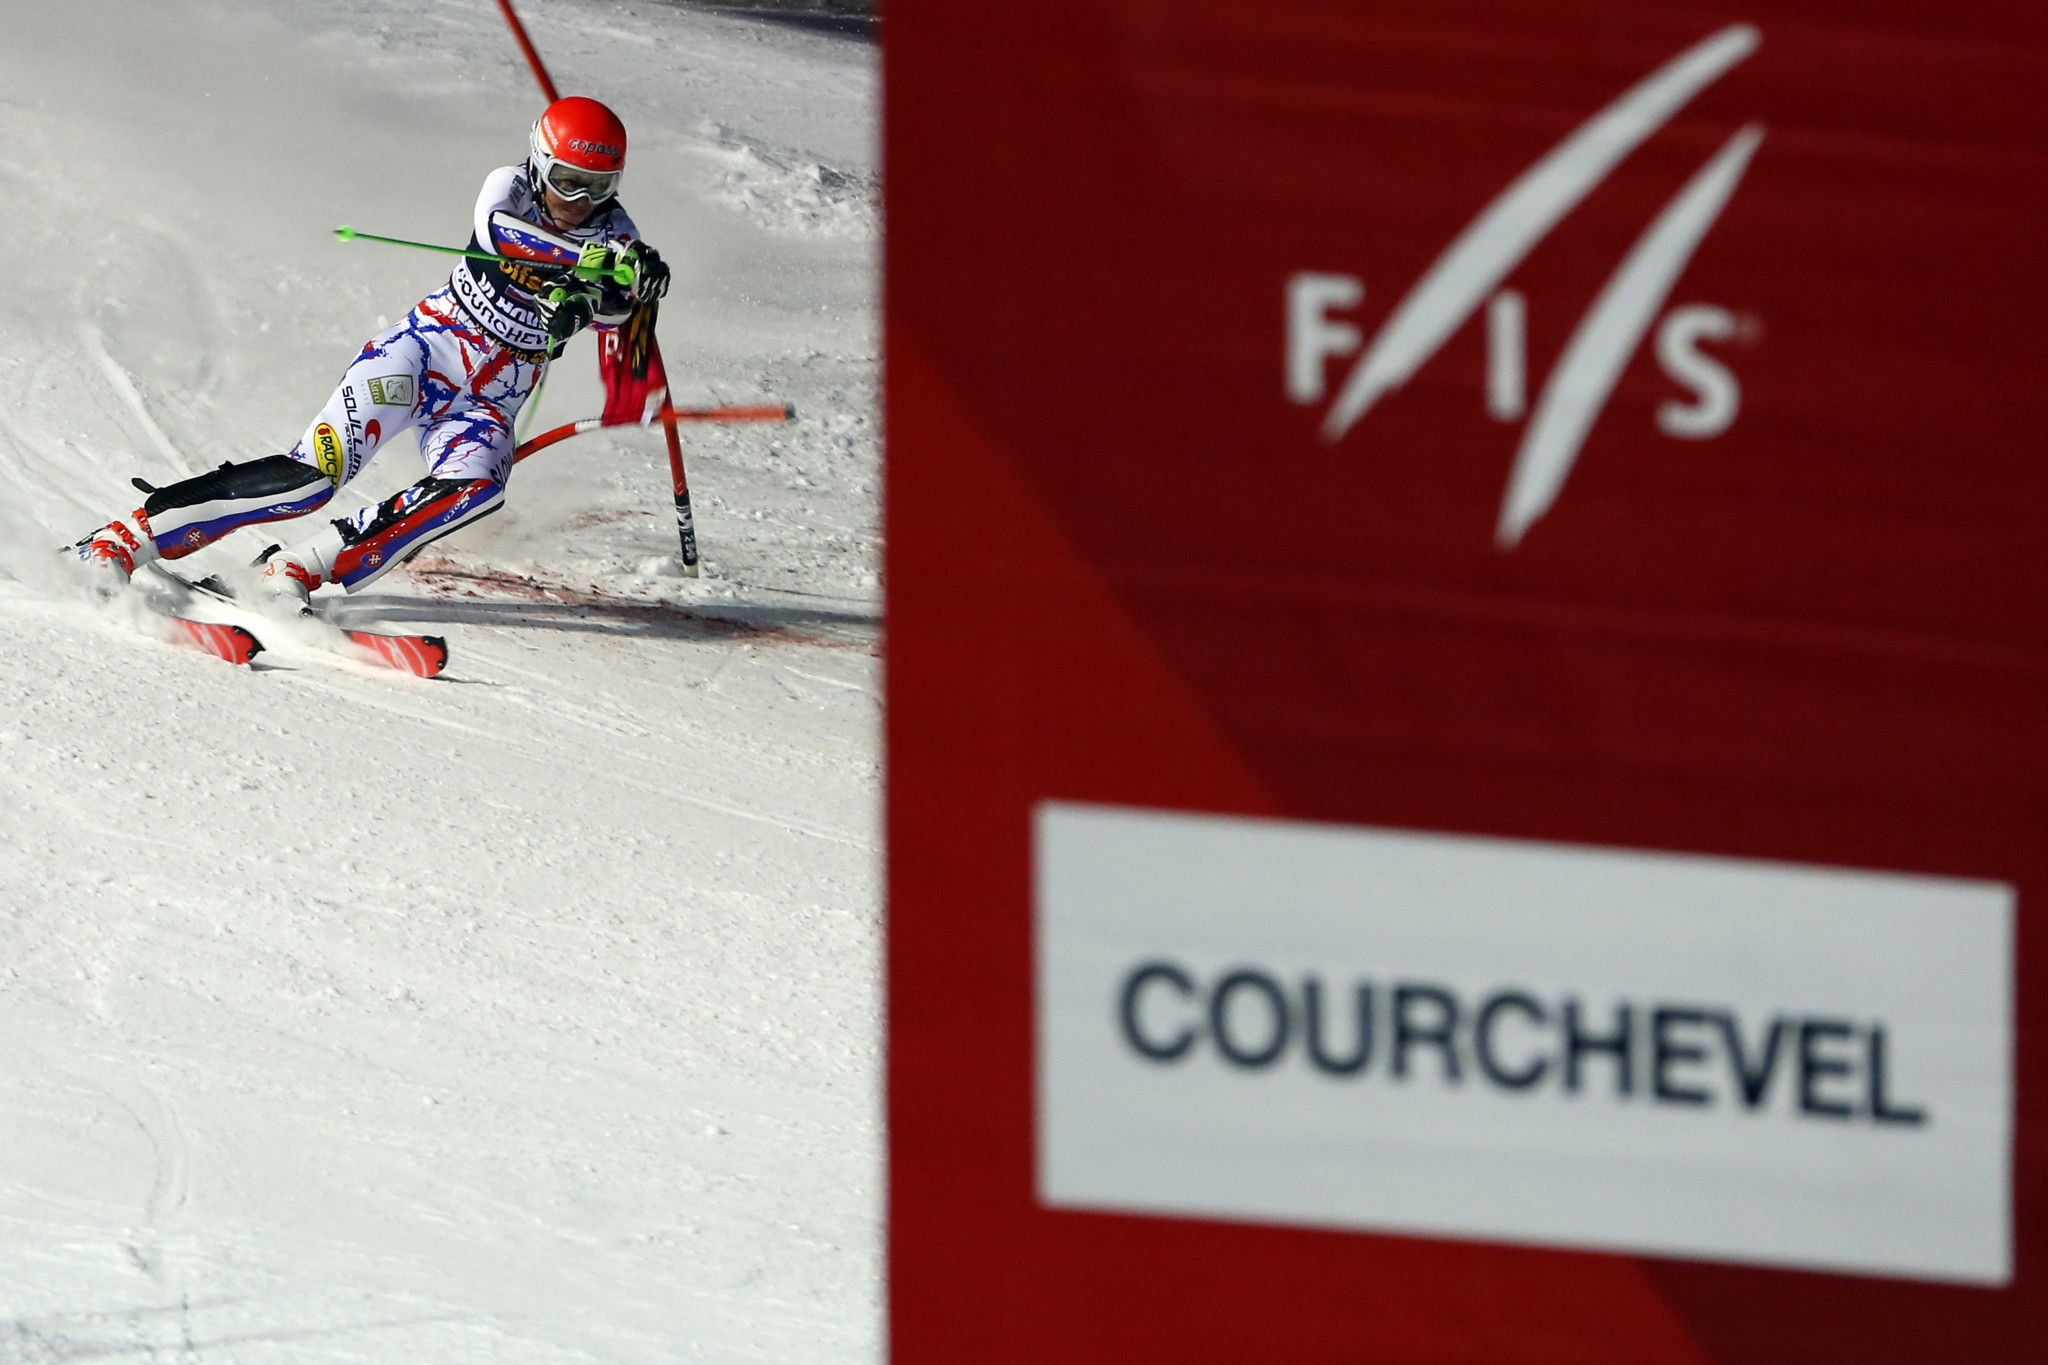  Courchevel-Meribel hosts pre-inspection visit for 2023 FIS Alpine World Ski Championships